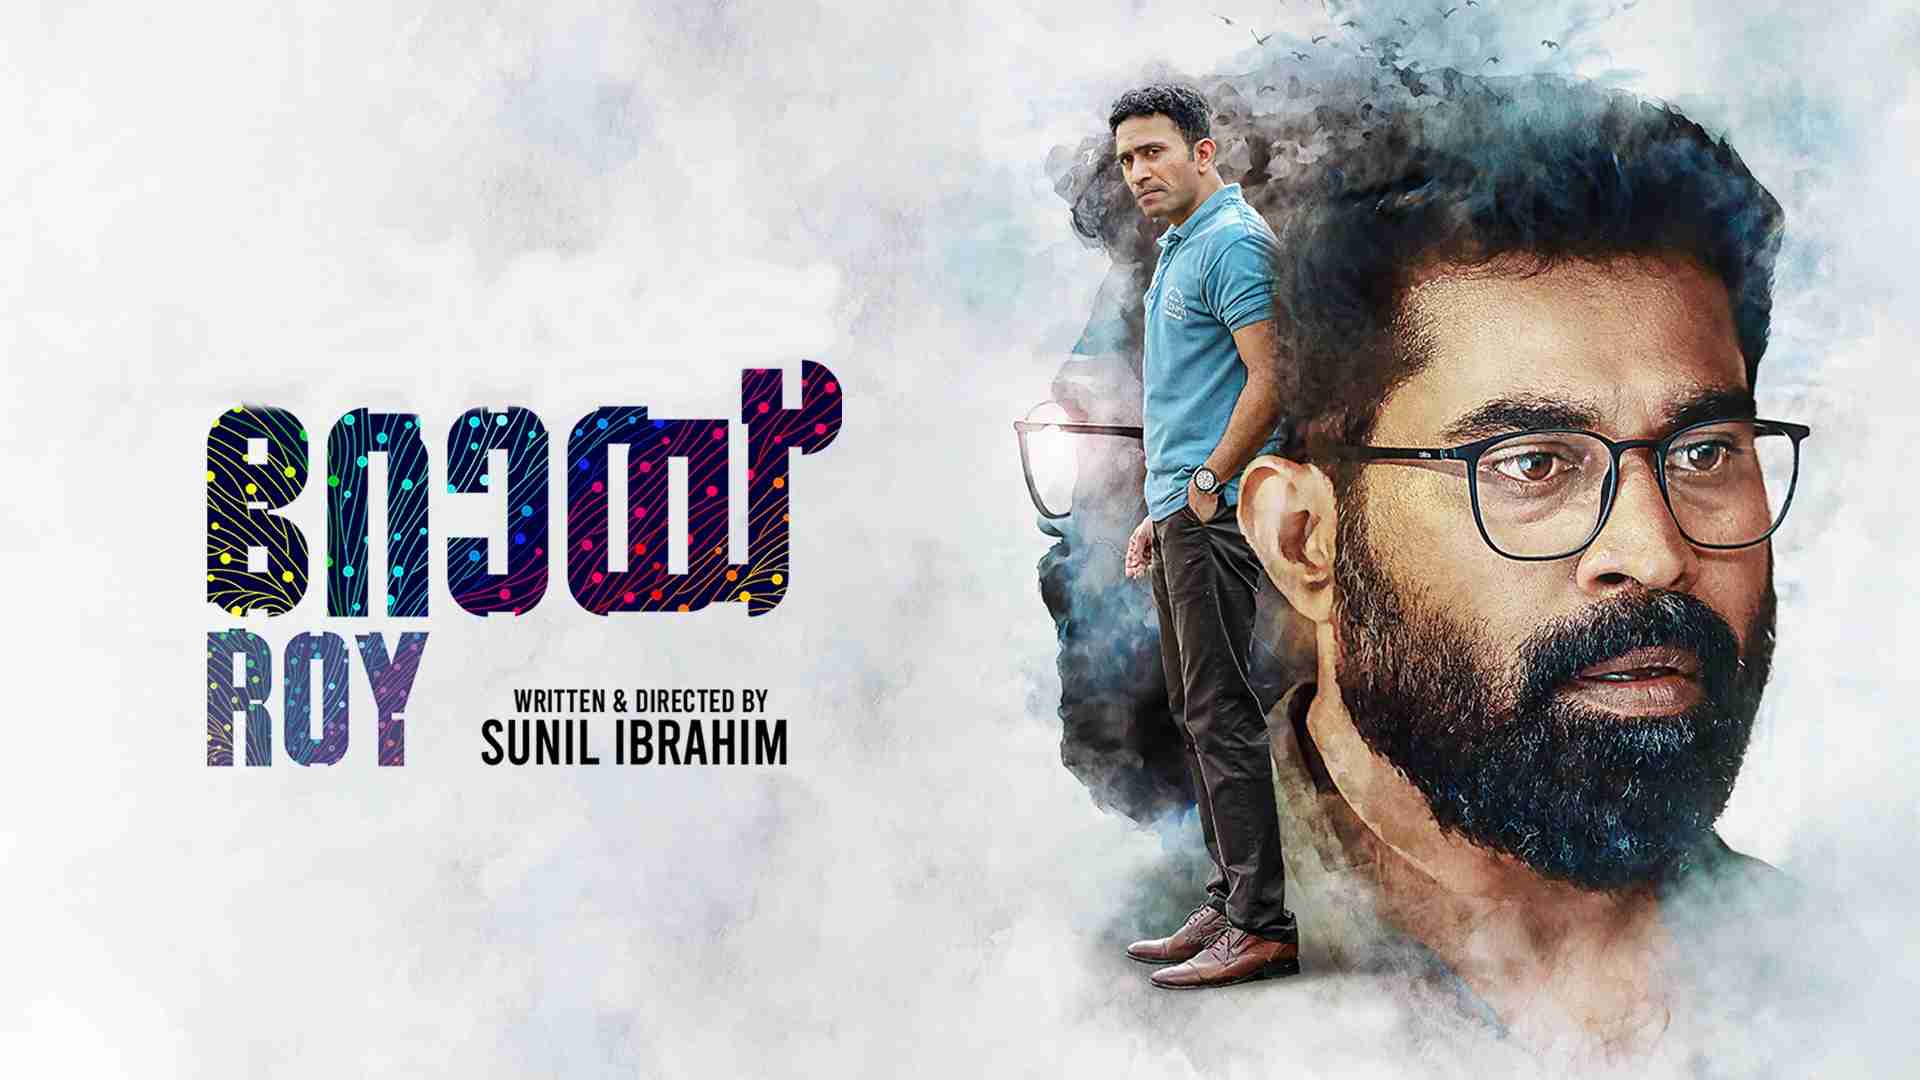 roy malayalam movie review